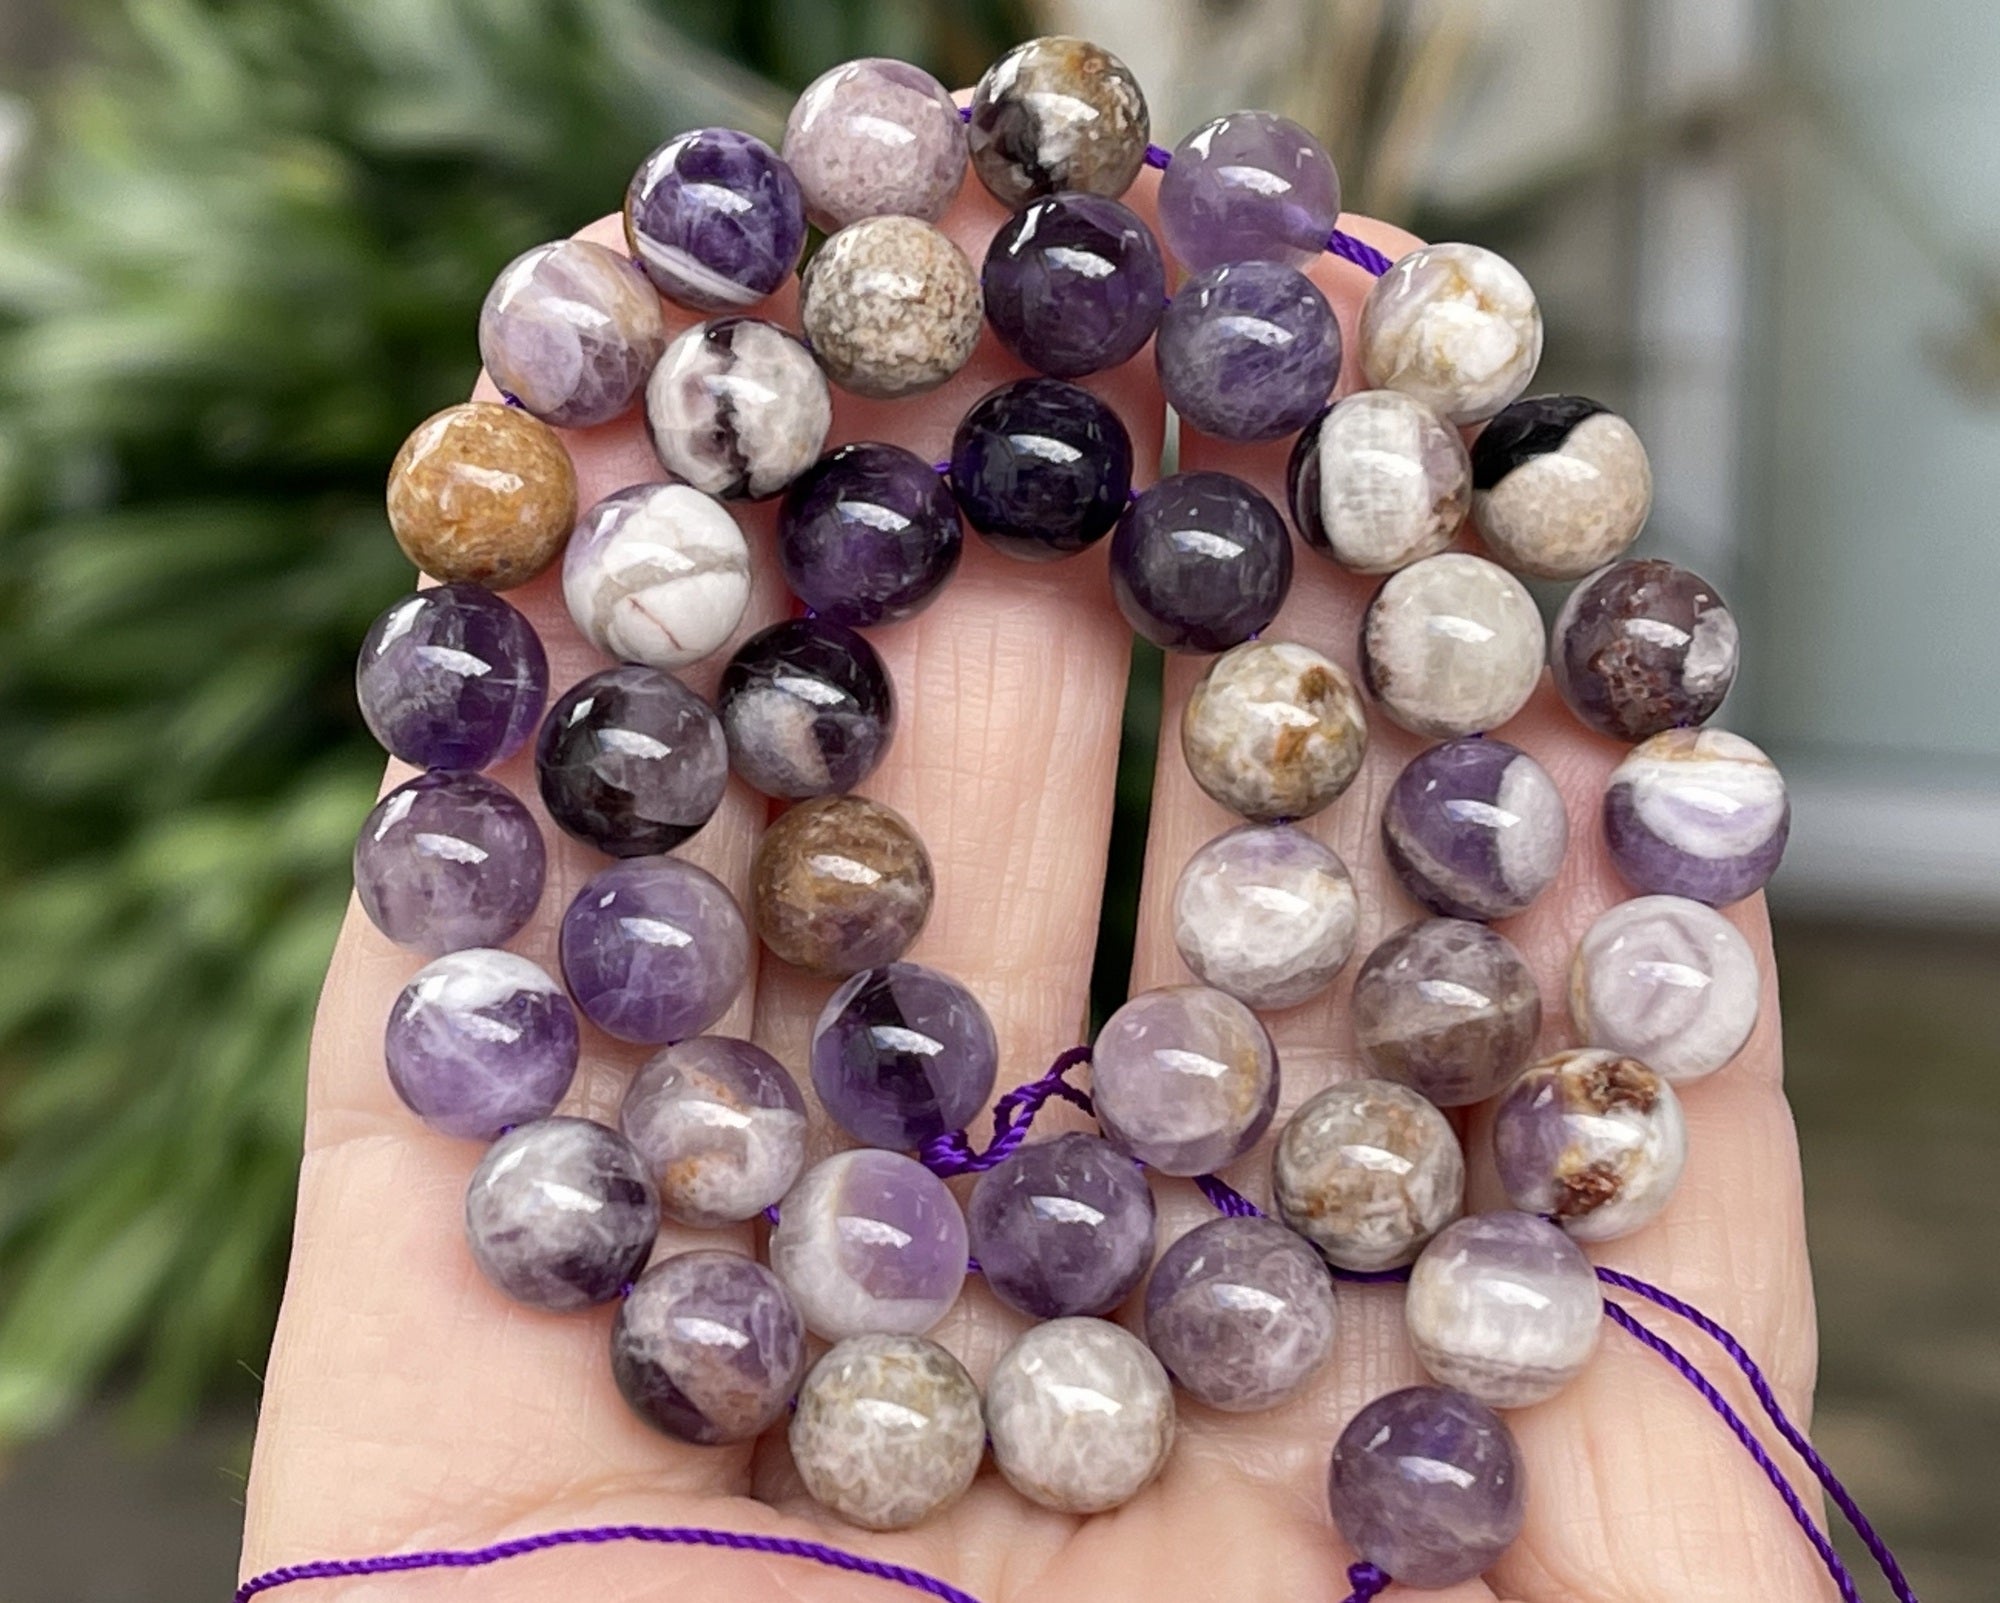 Flower Amethyst 8mm round natural gemstone beads 15.5" strand - Oz Beads 